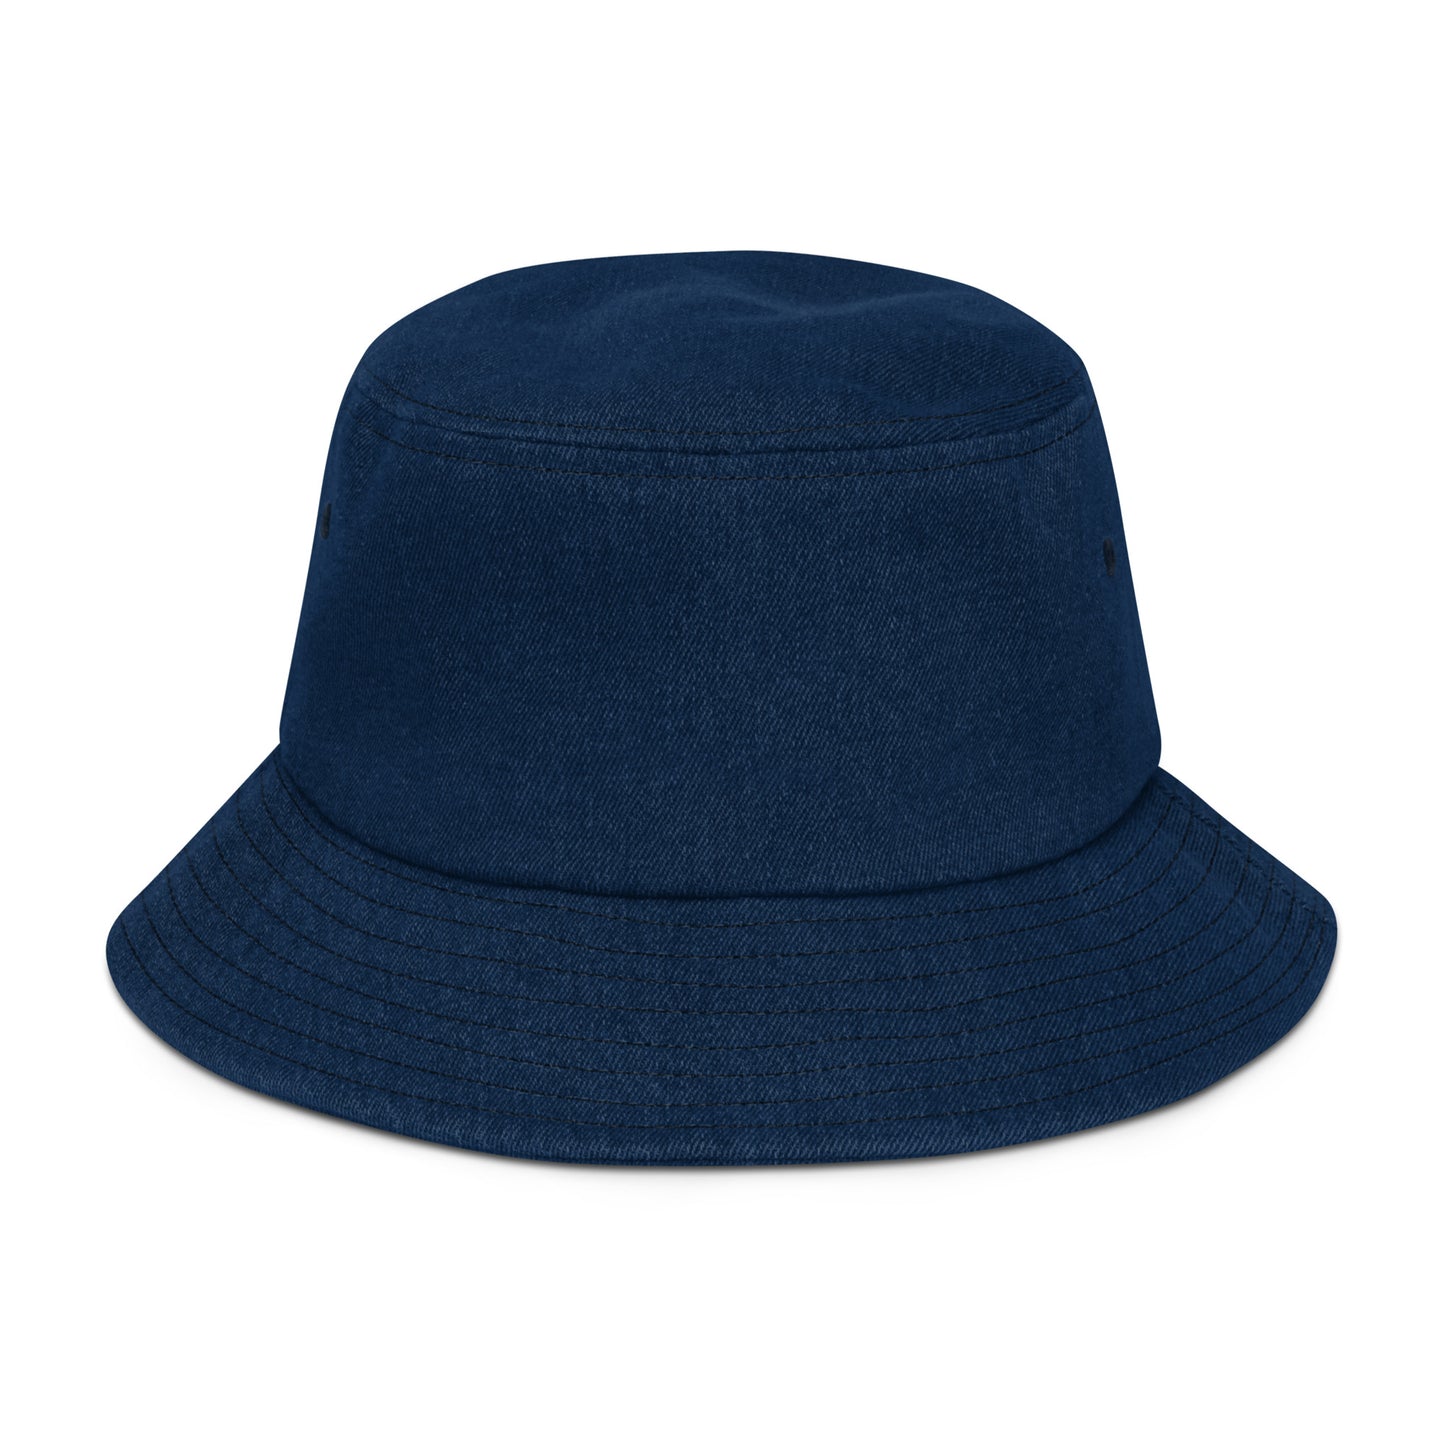 Advisory Denim bucket hat